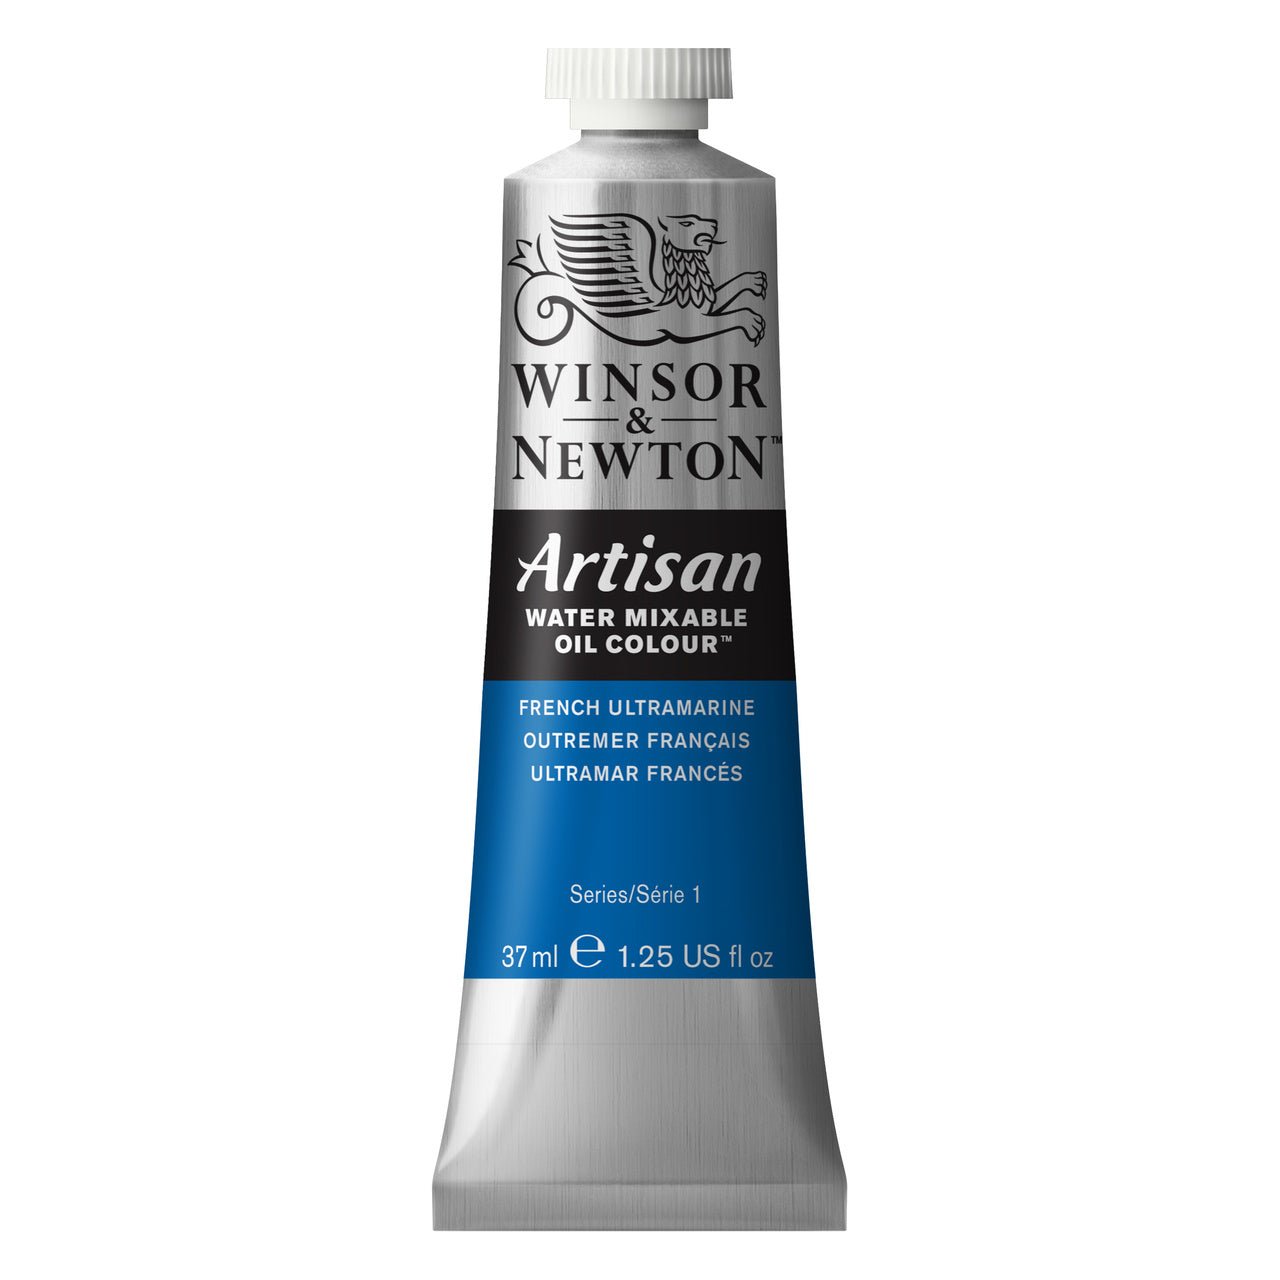 Winsor & Newton Artisan Water Mixable Oil 37ml - French Ultramarine - merriartist.com